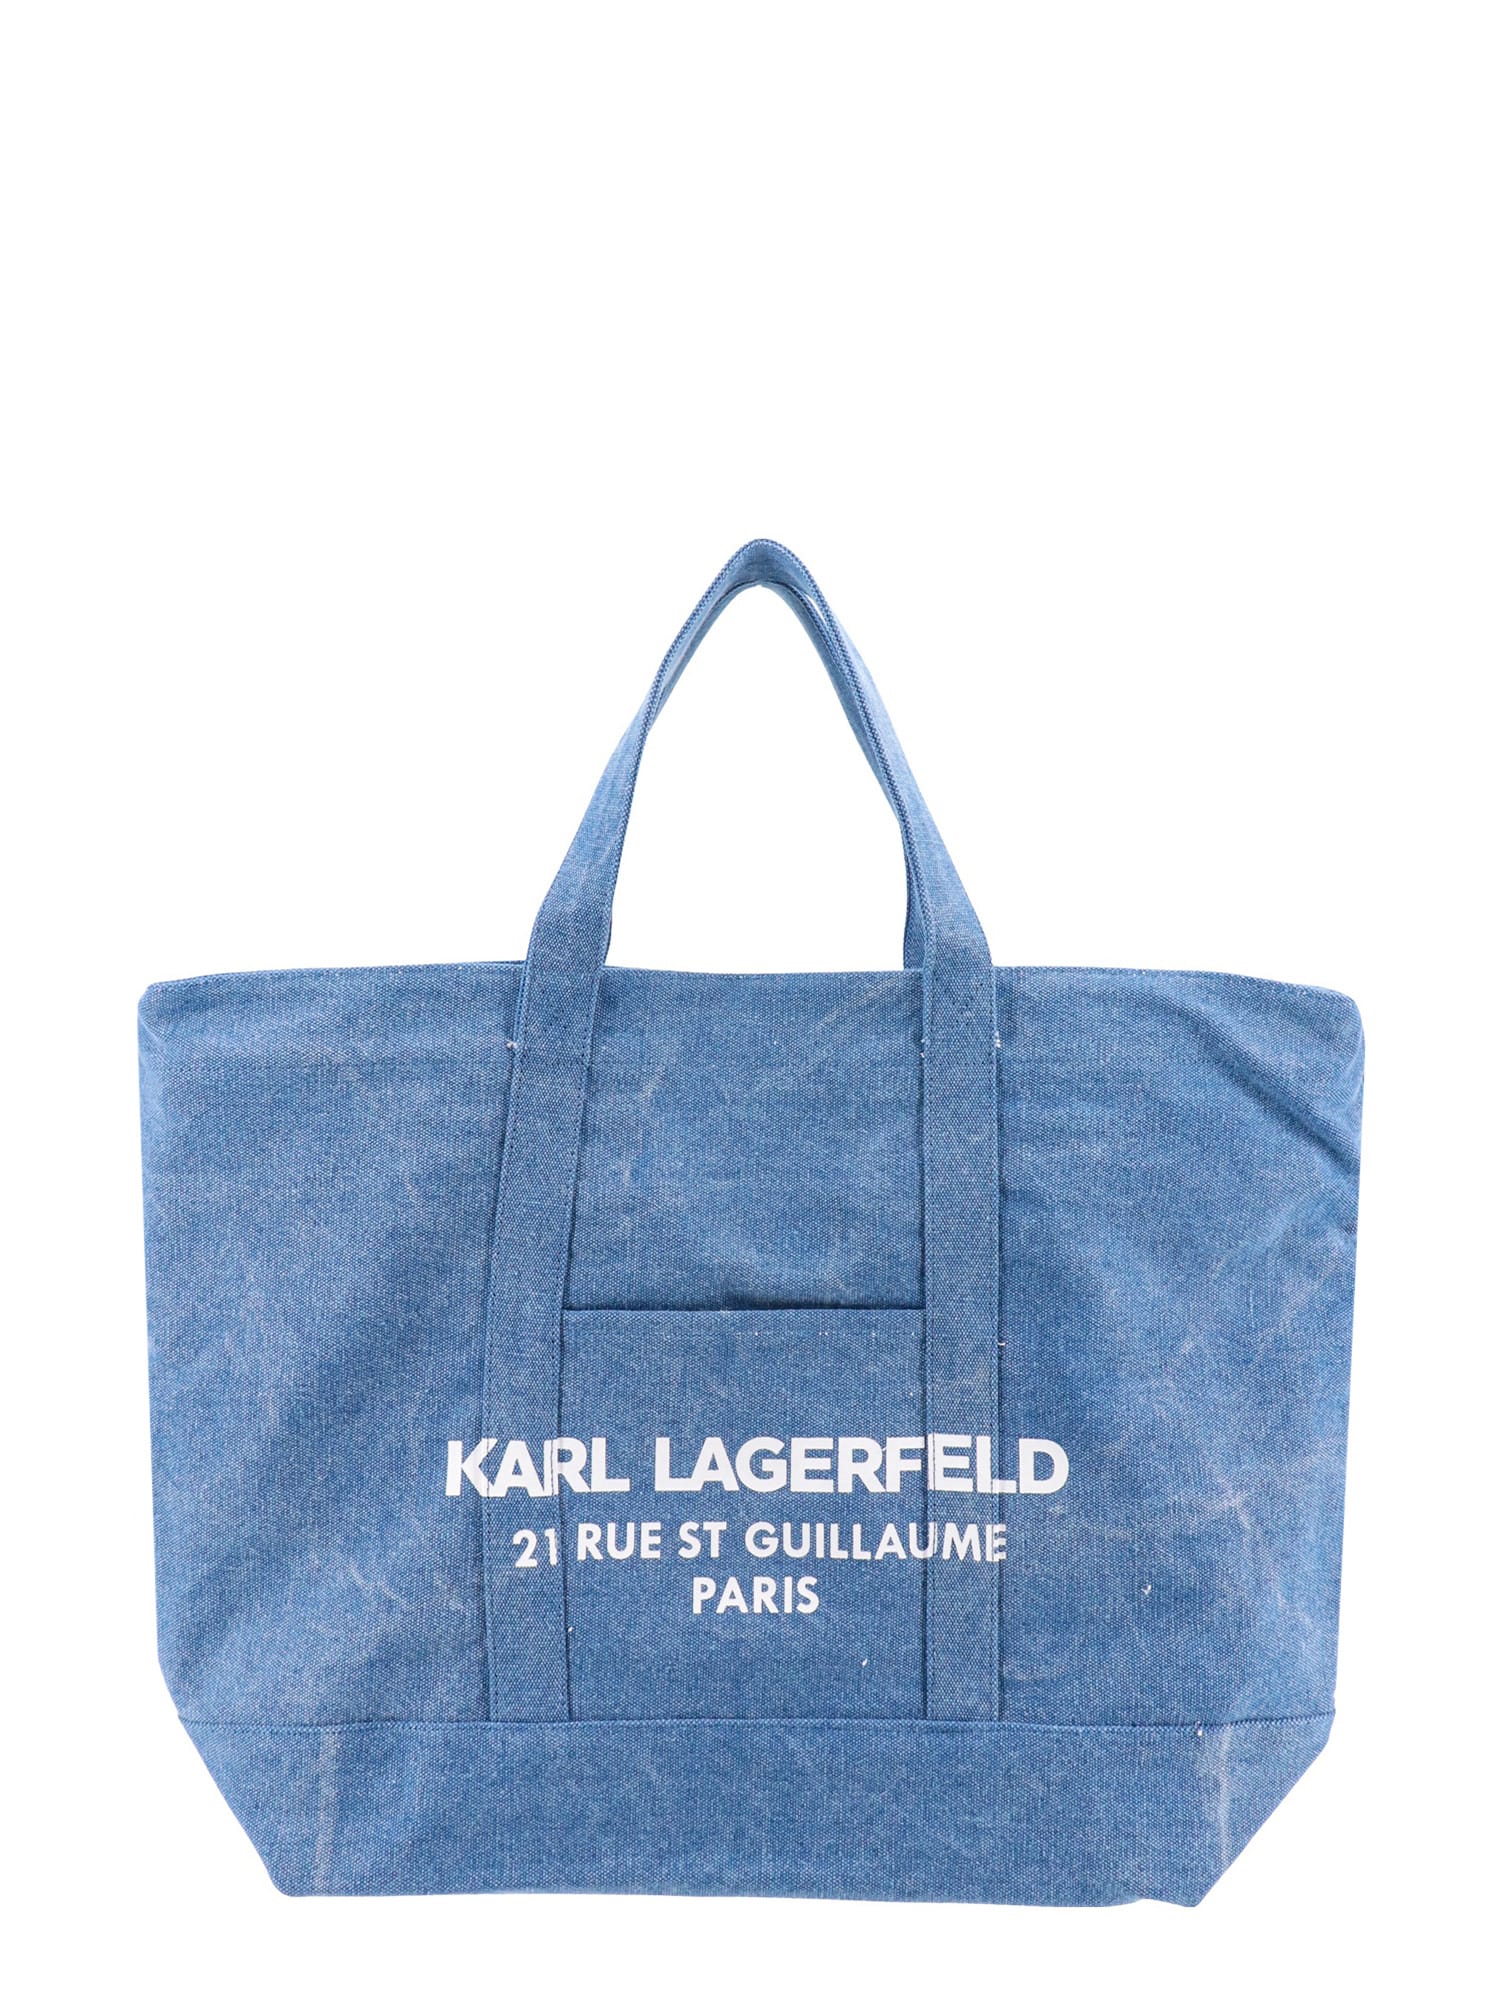 KARL LAGERFELD SHOPPING BAG 